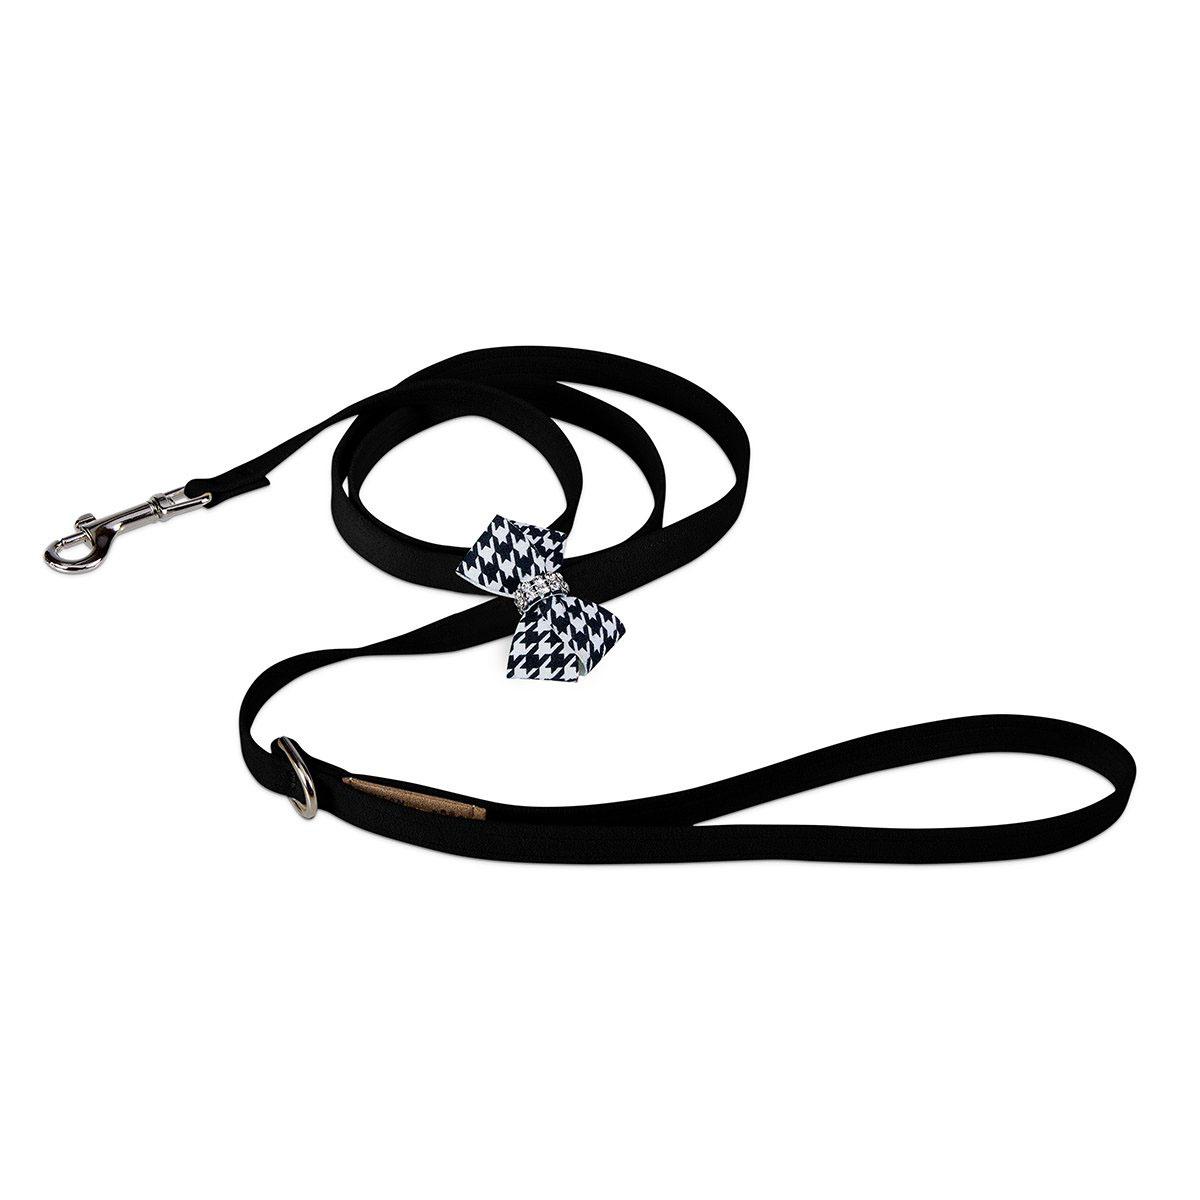 Susan Lanci Black & White Houndstooth Nouveau Bow Dog Leash - Black